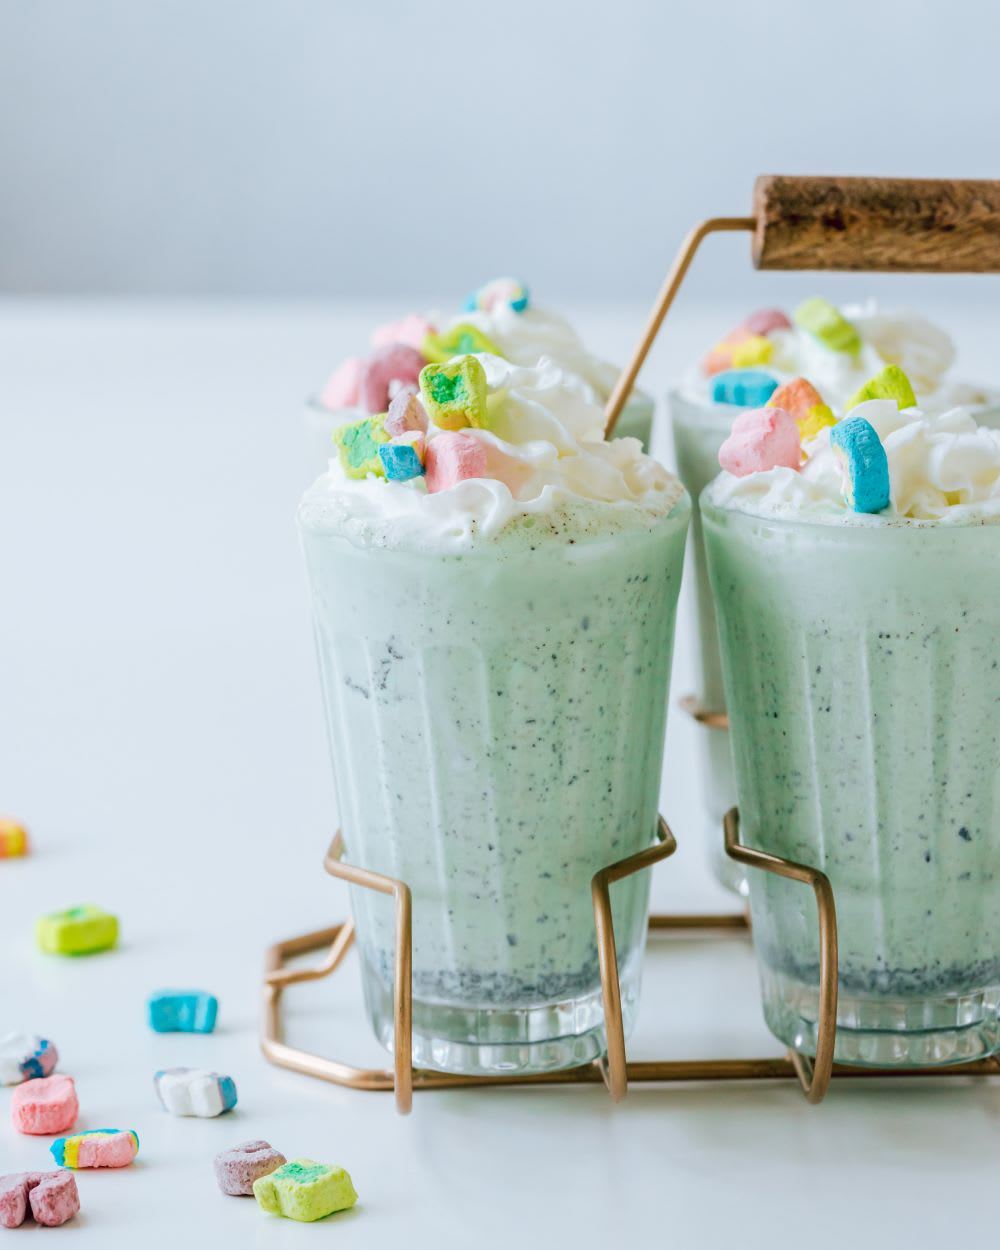 Enjoy A Boozy Lucky Charms Milkshake For Your St. Patrick's Day Celebration  - Lulus.com Fashion Blog